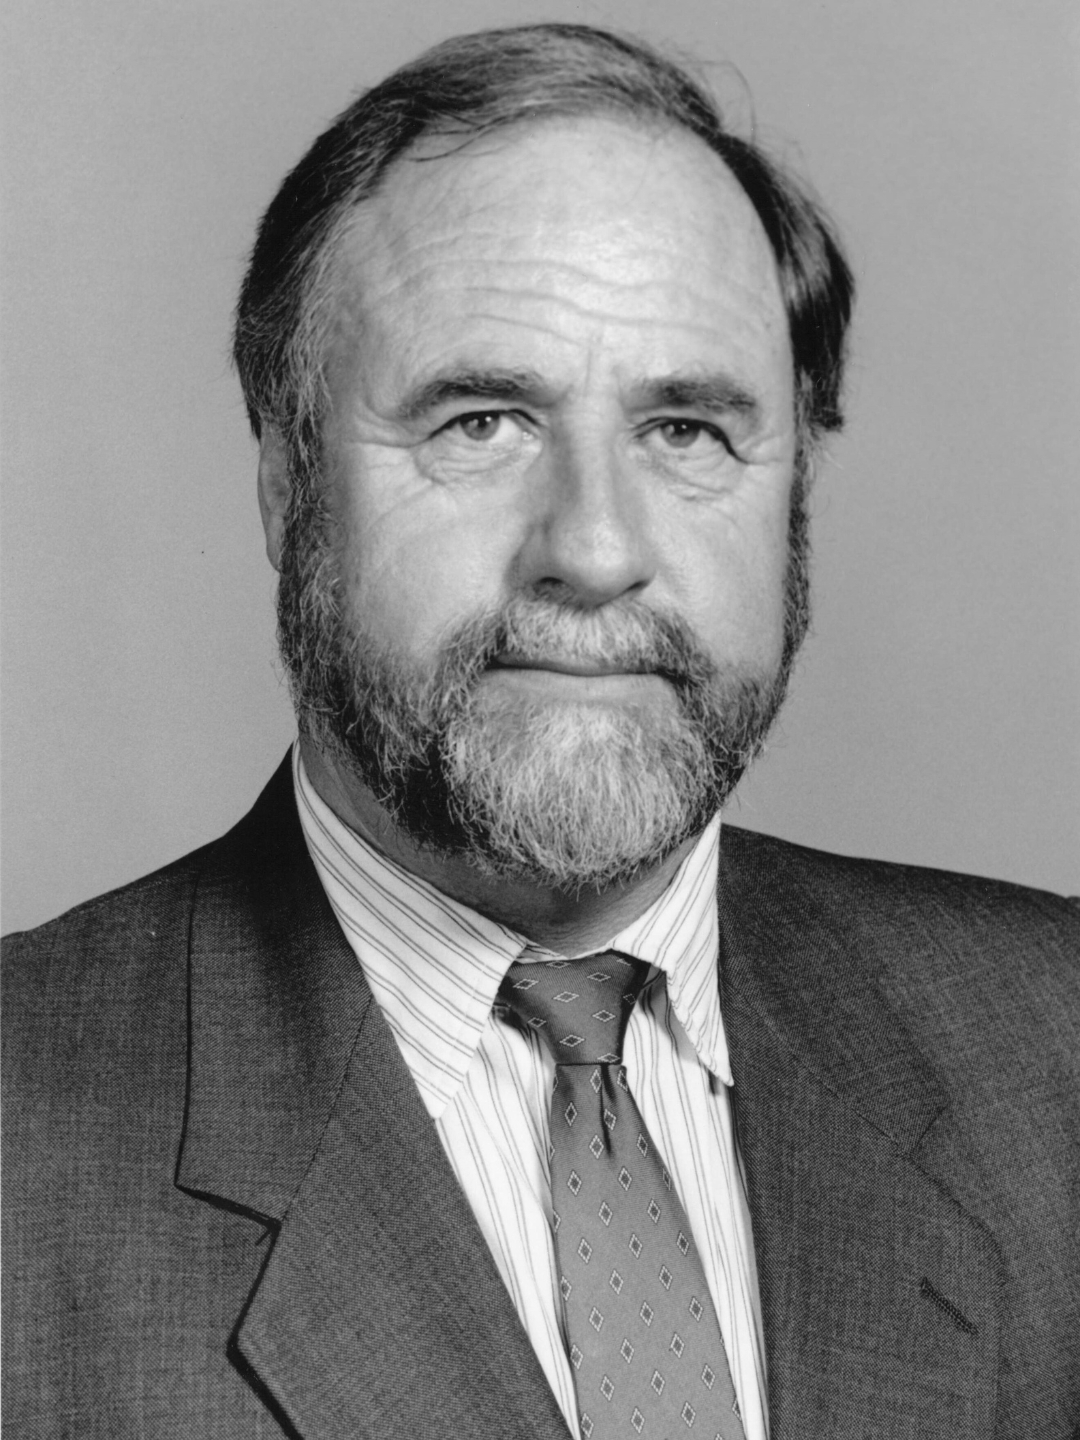 Photo of David Evershed, Executive Director of VHA, 1986-1988.